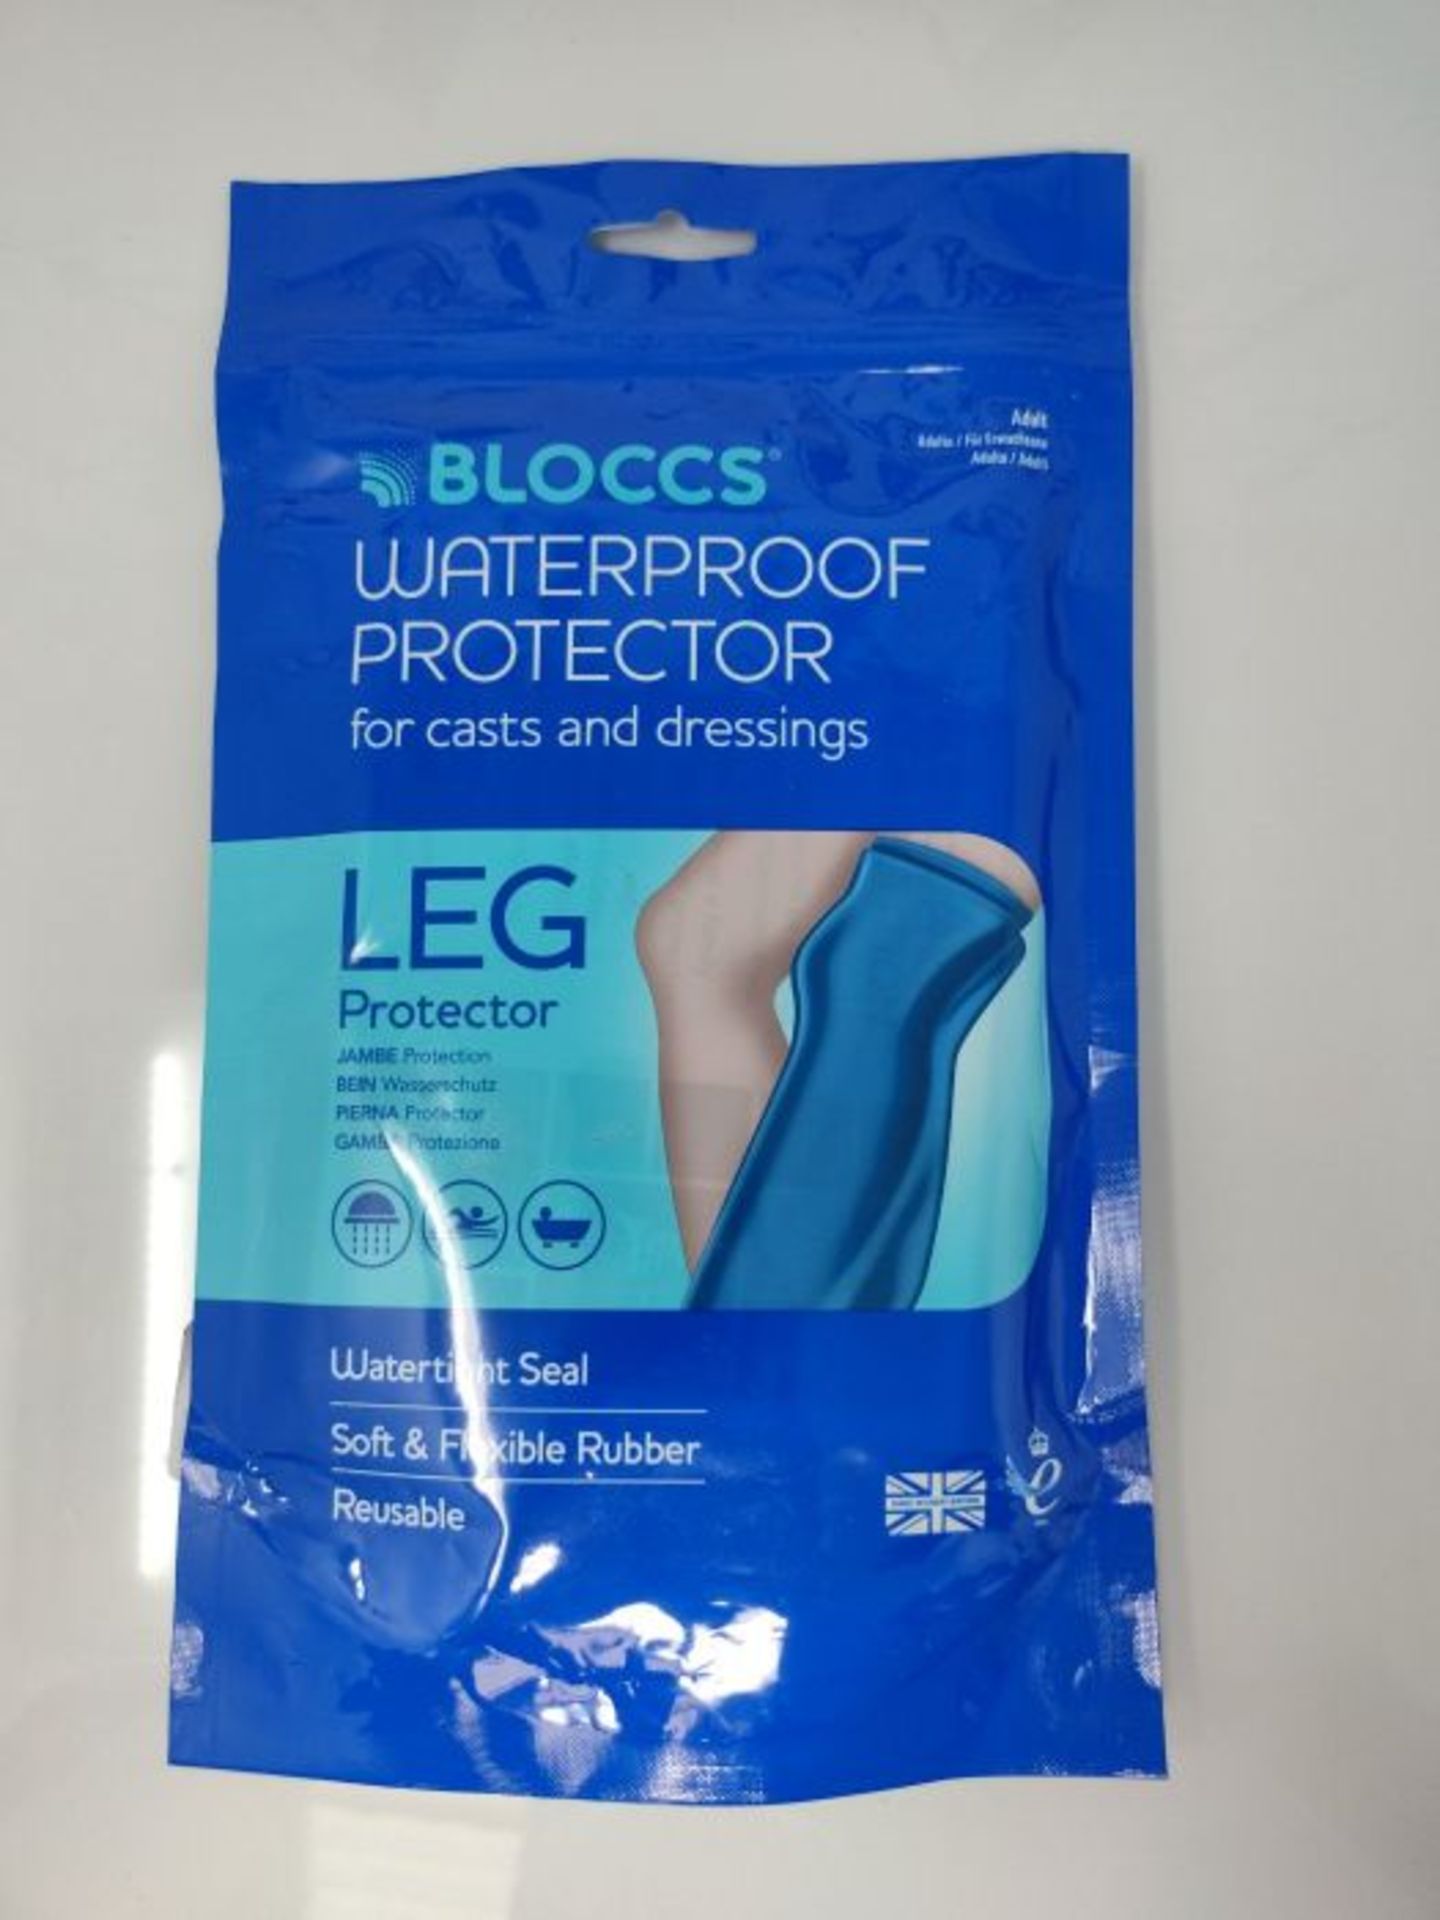 Bloccs Waterproof Cover for Plaster Cast Leg, Swim, Shower & Bathe. Watertight Protect - Image 2 of 3